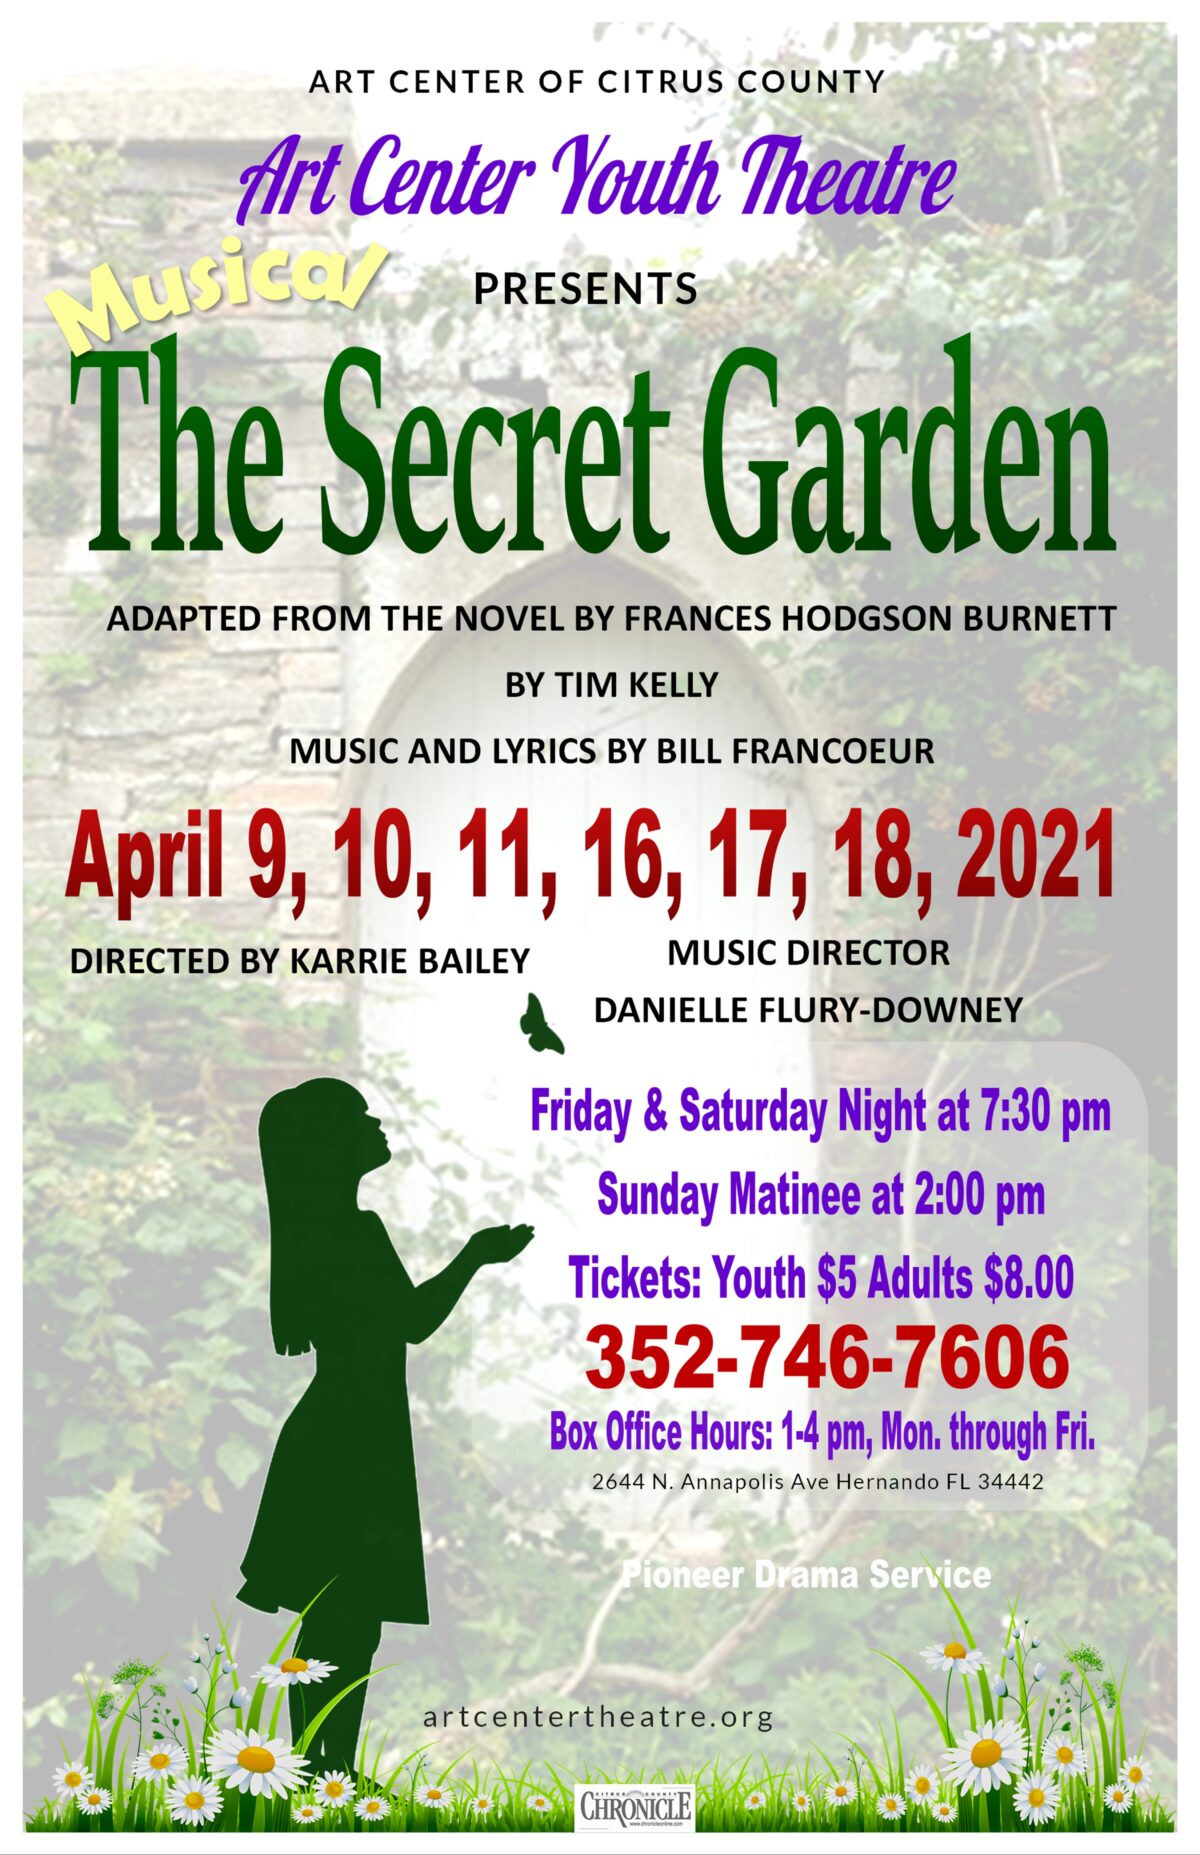 Art Center Youth Theatre Presents: The Secret Garden, April 9-18